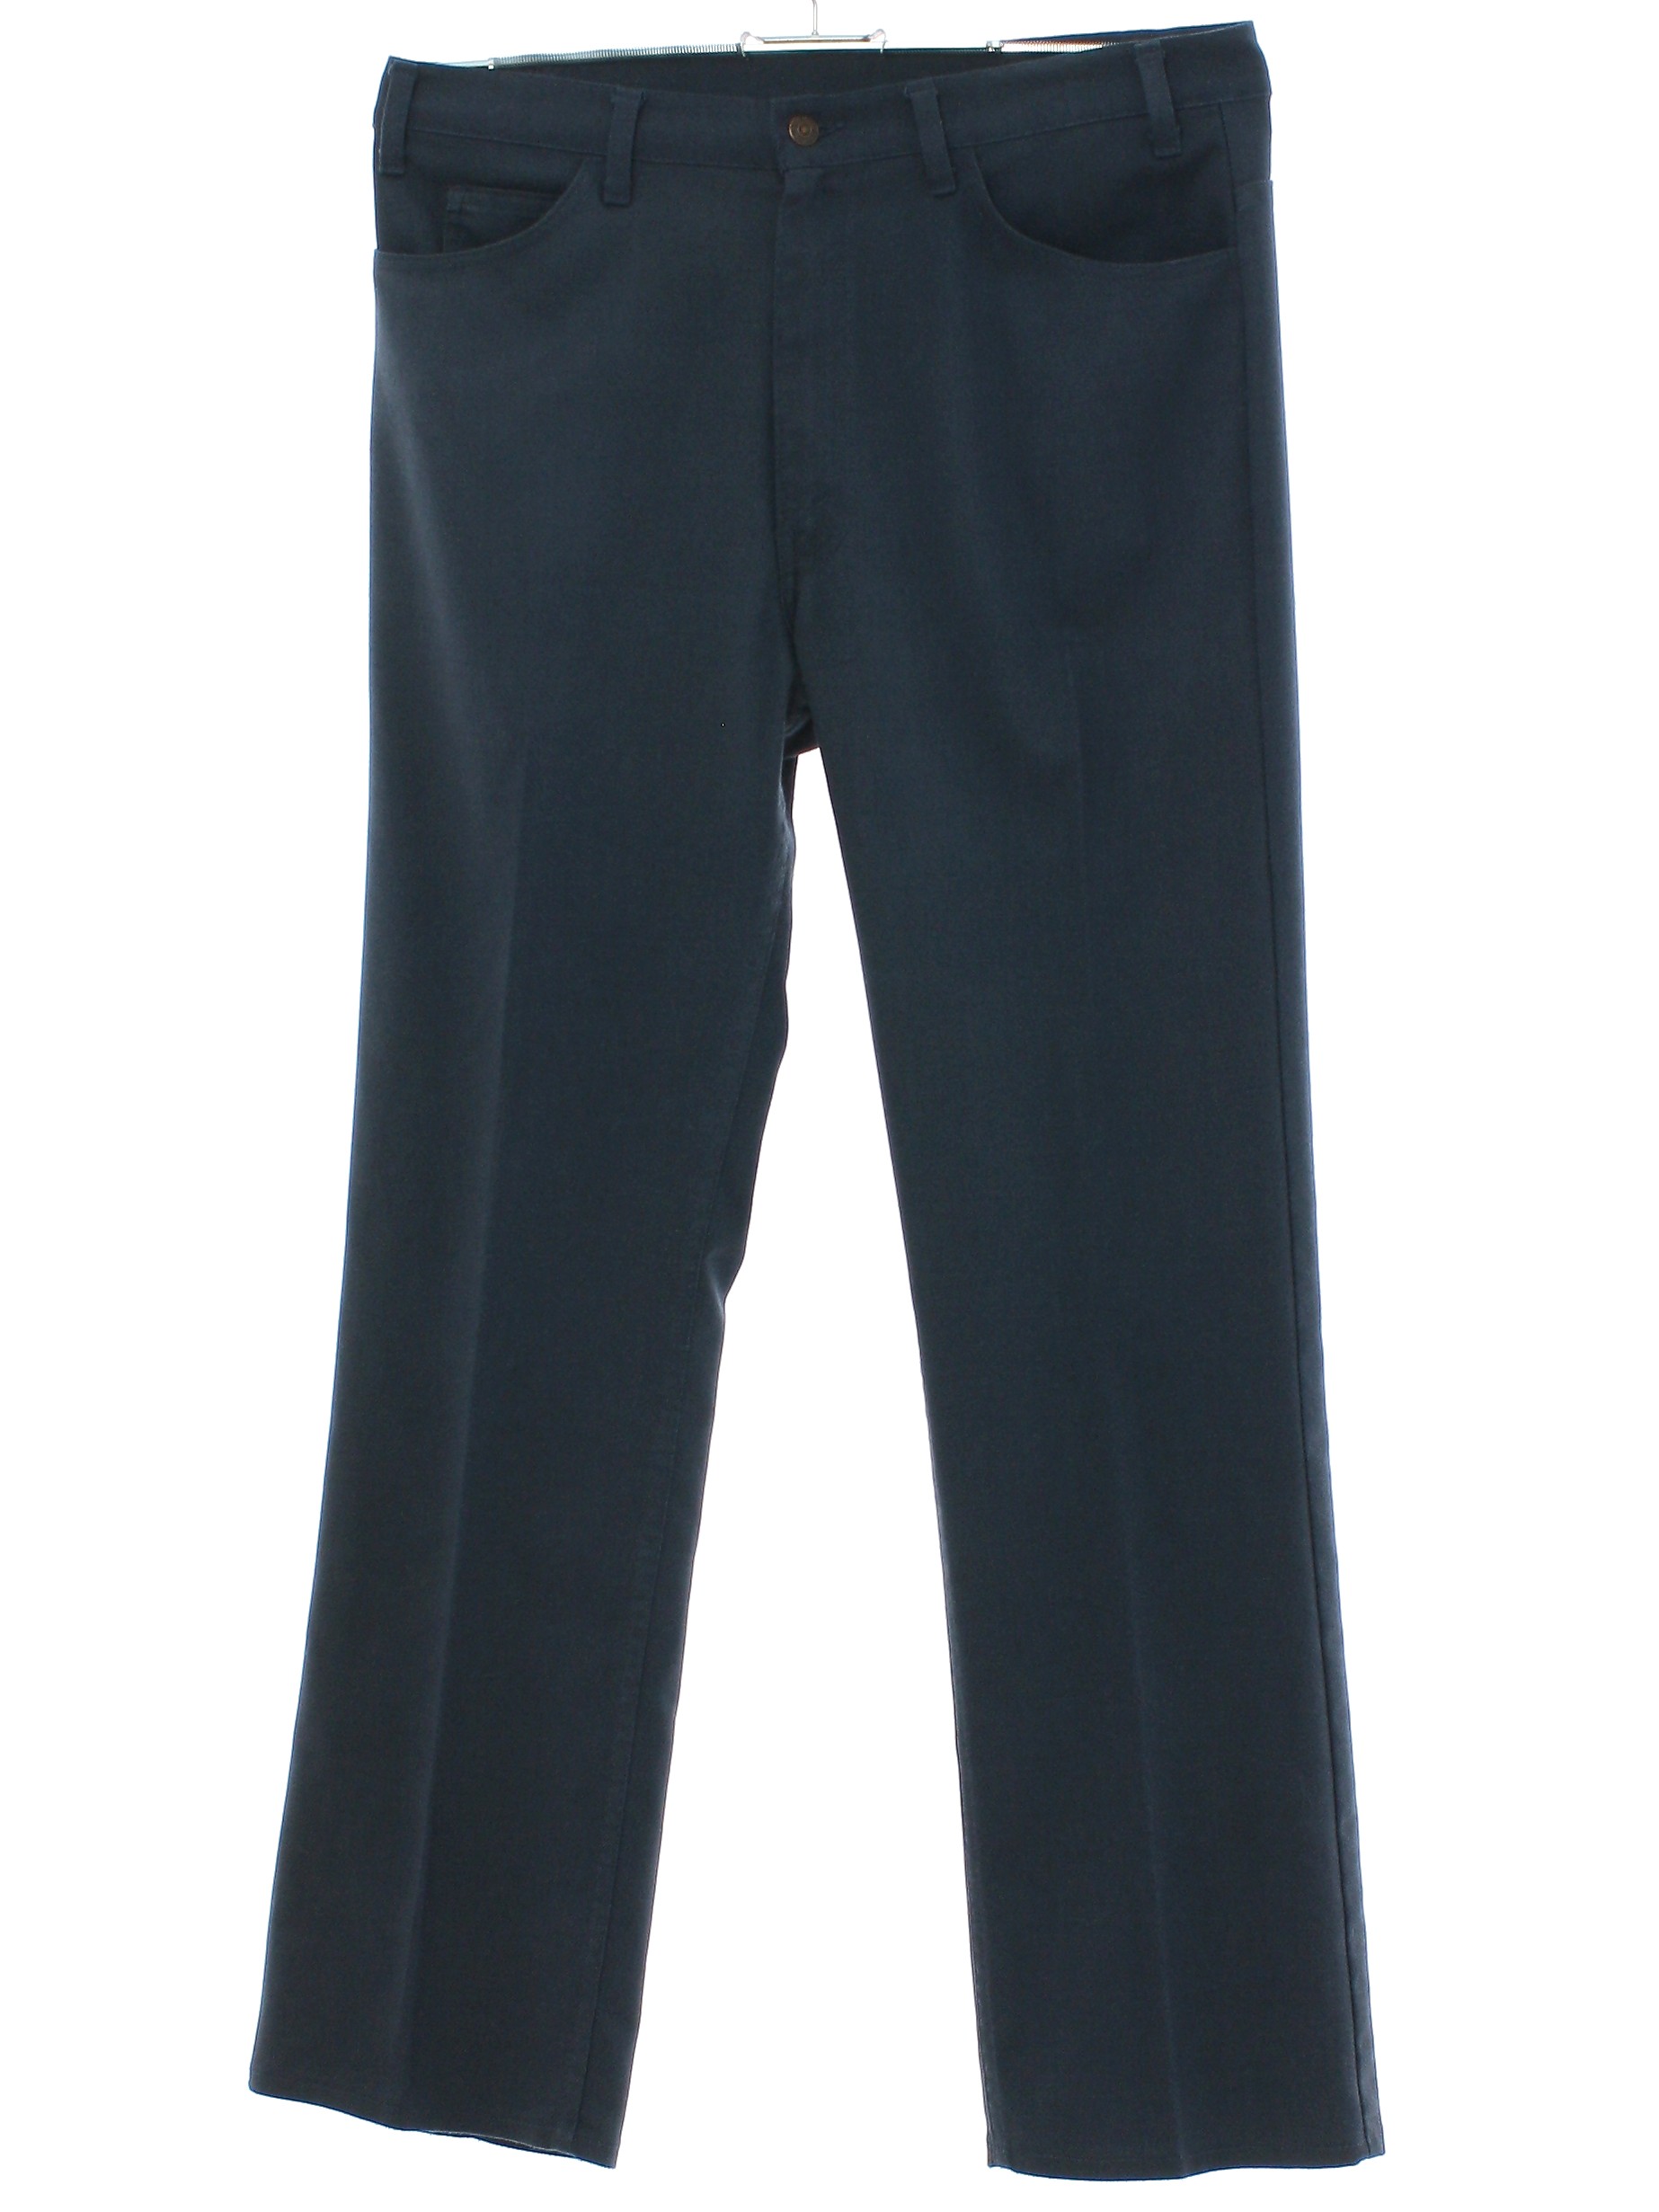 Retro 1980s Pants: 80s -Levis Sta Prest- Mens dark blueish-gray cotton ...